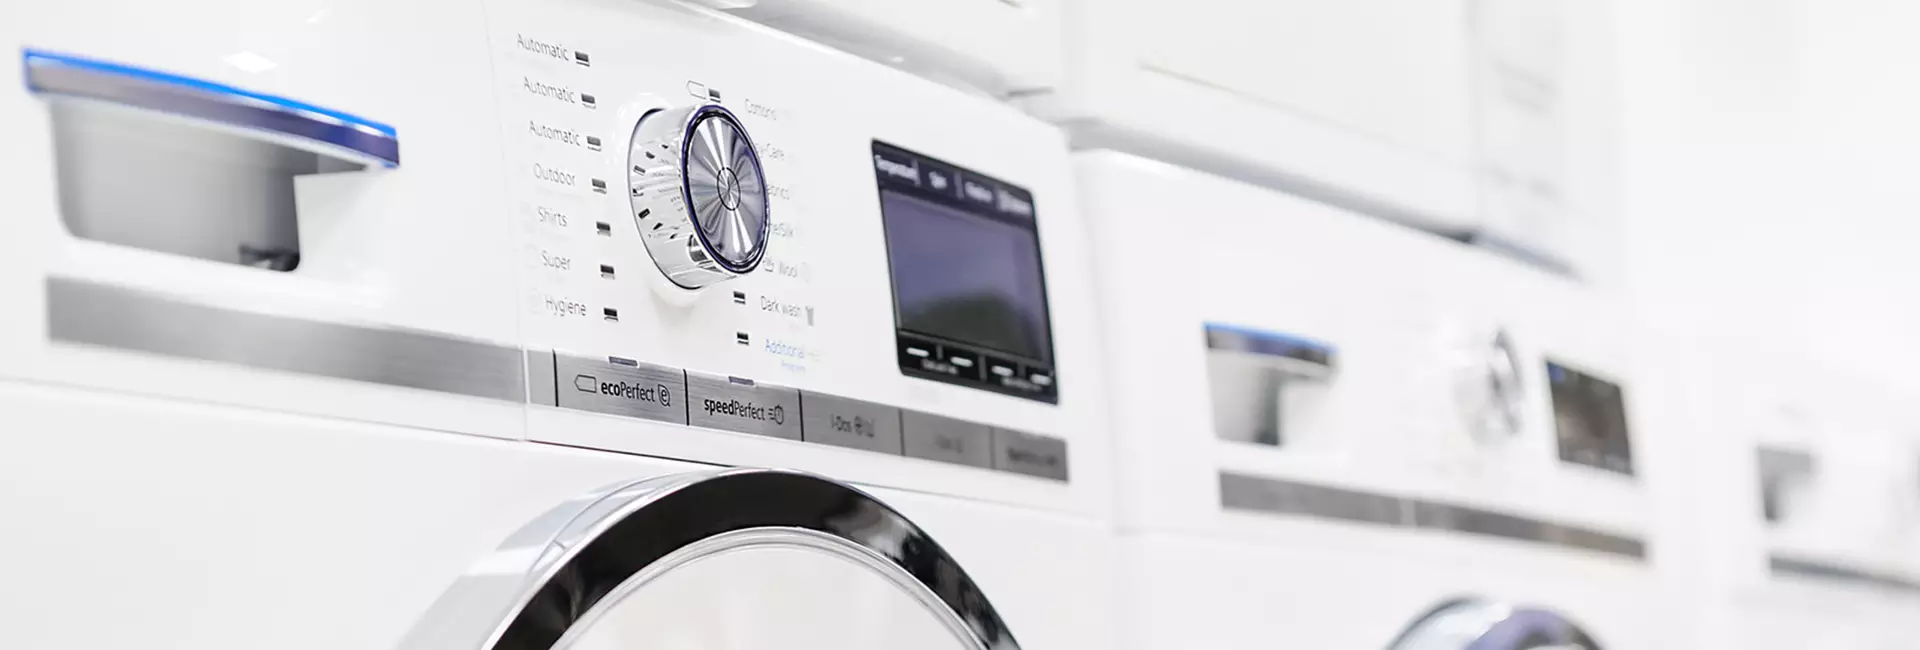 Pirat lyserød I Vaskemaskine service | Reparation vaskemaskine | Storkøbenhavn